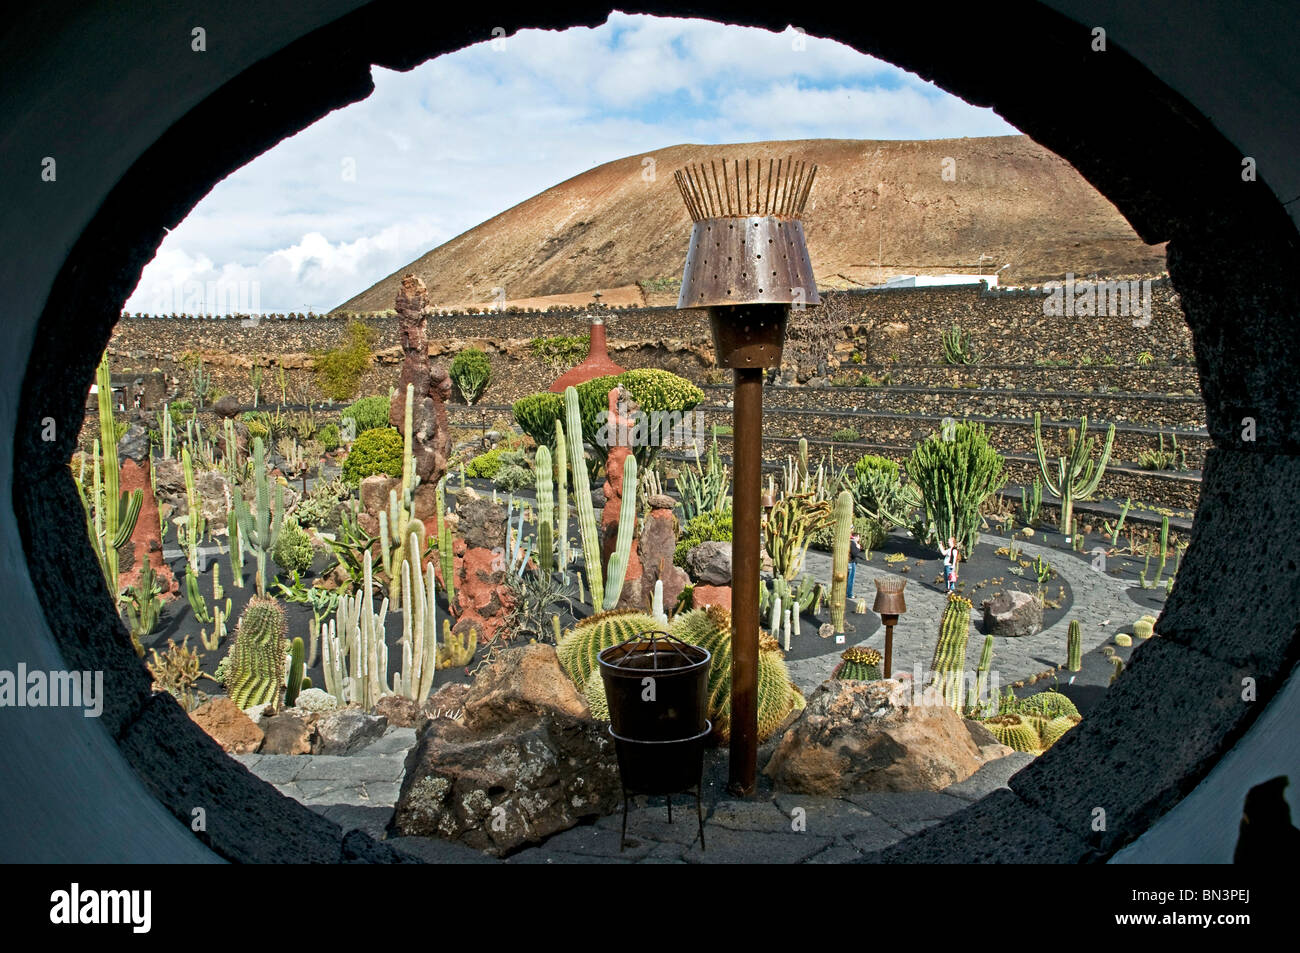 Jardin de Cactus, Guatiza, Lanzarote, Canary Islands, Spain, Europe Stock Photo